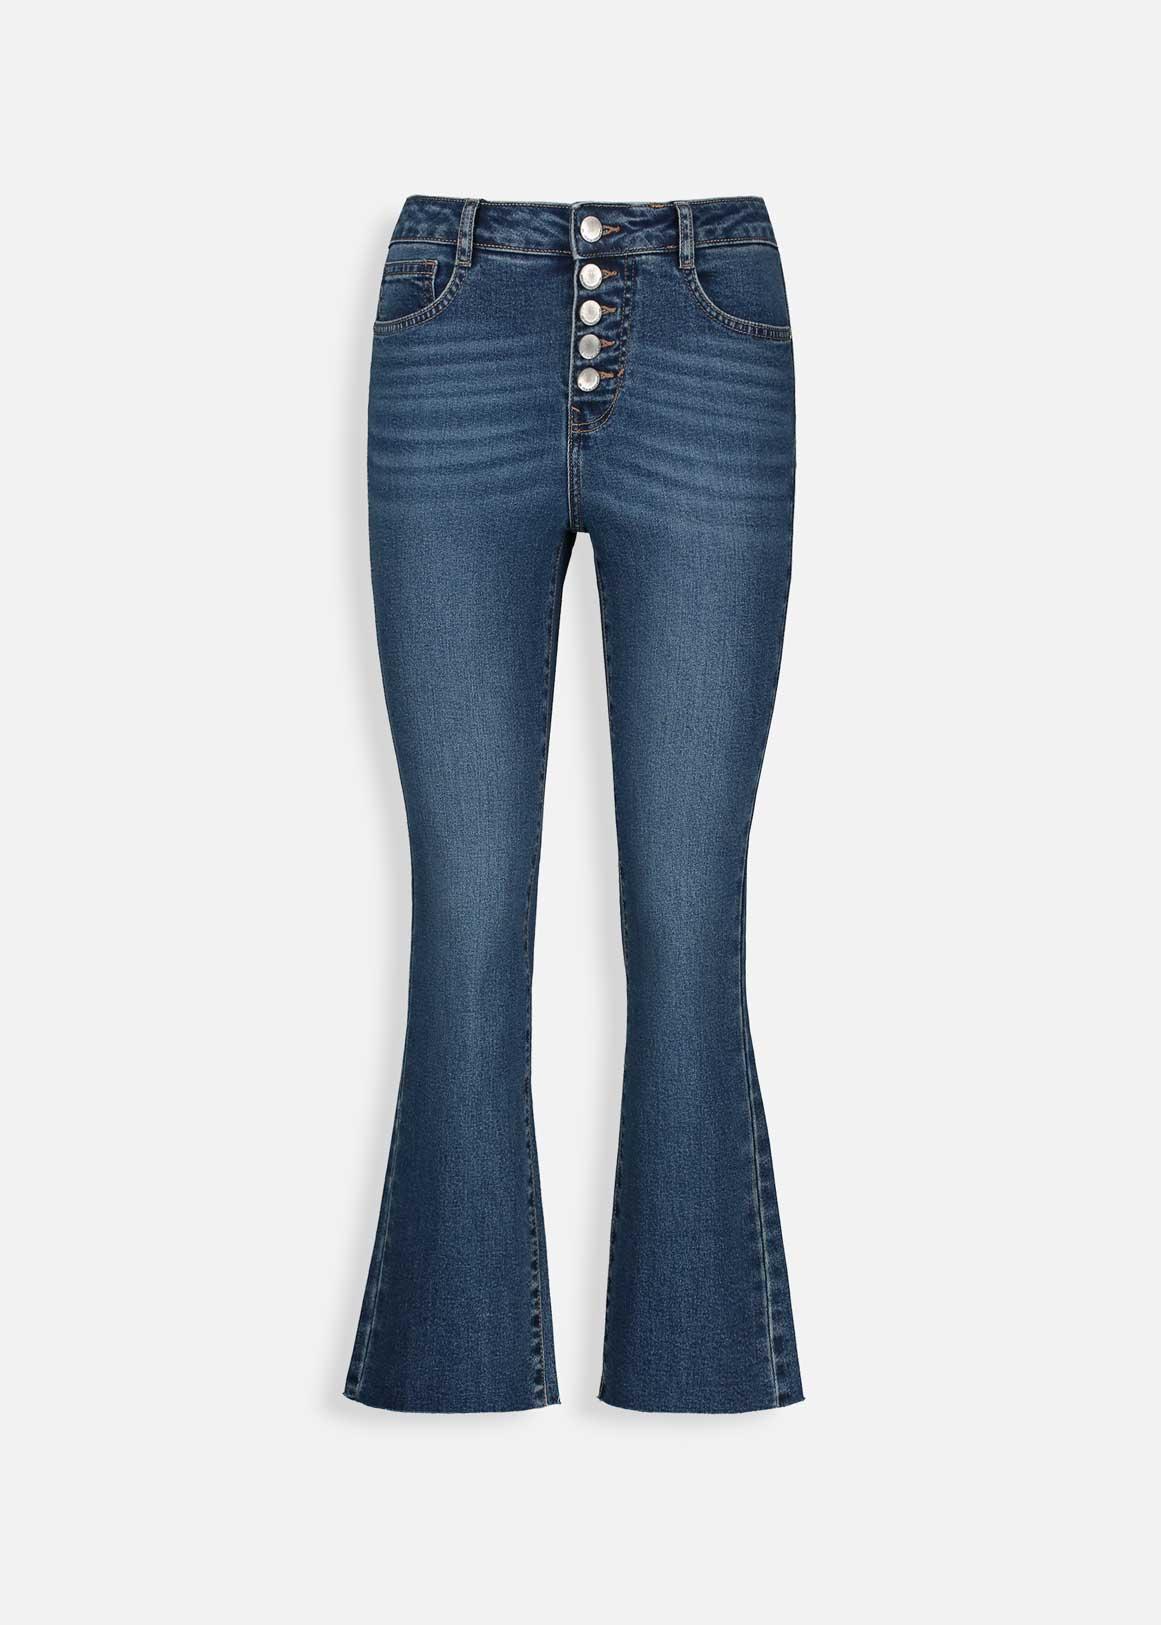 Black high waist flare jean with pockets – D'vine Designs